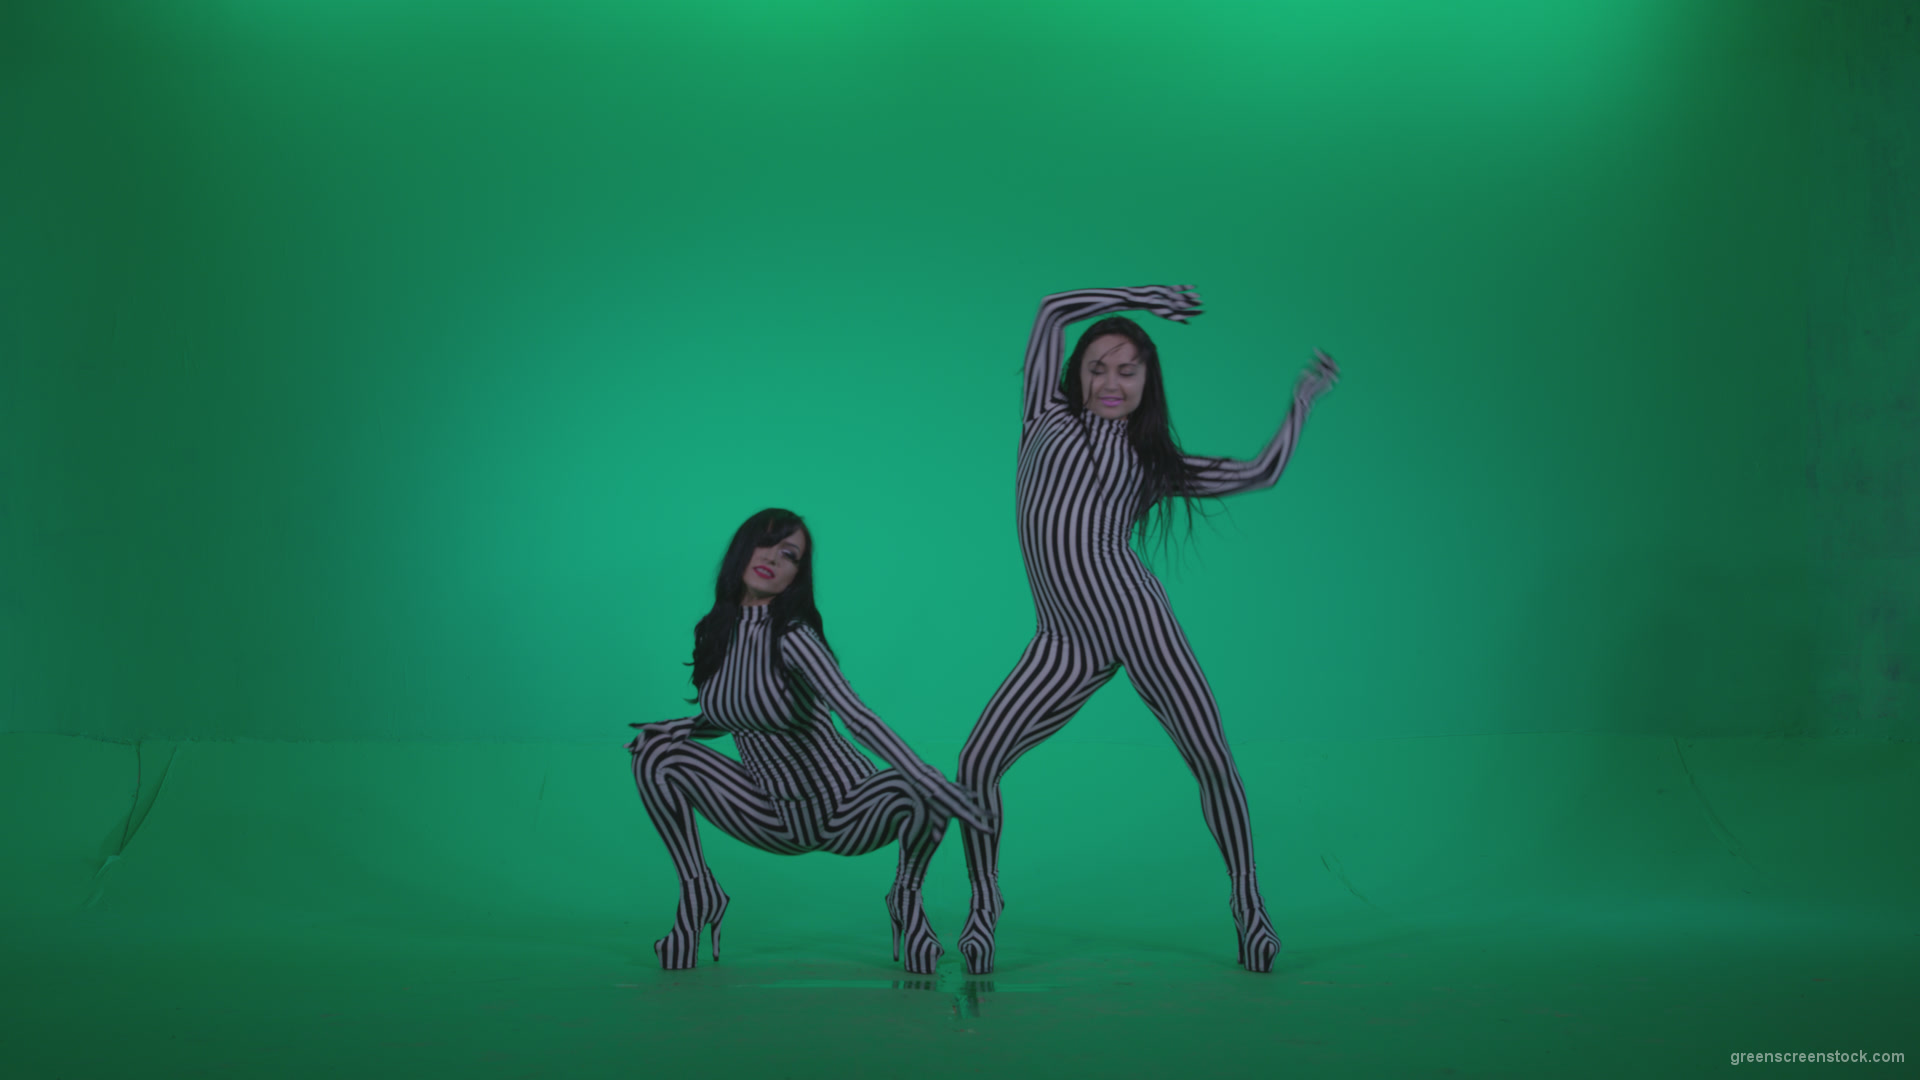 Go-go-Dancer-White-Stripes-s5-Green-Screen-Video-Footage_009 Green Screen Stock